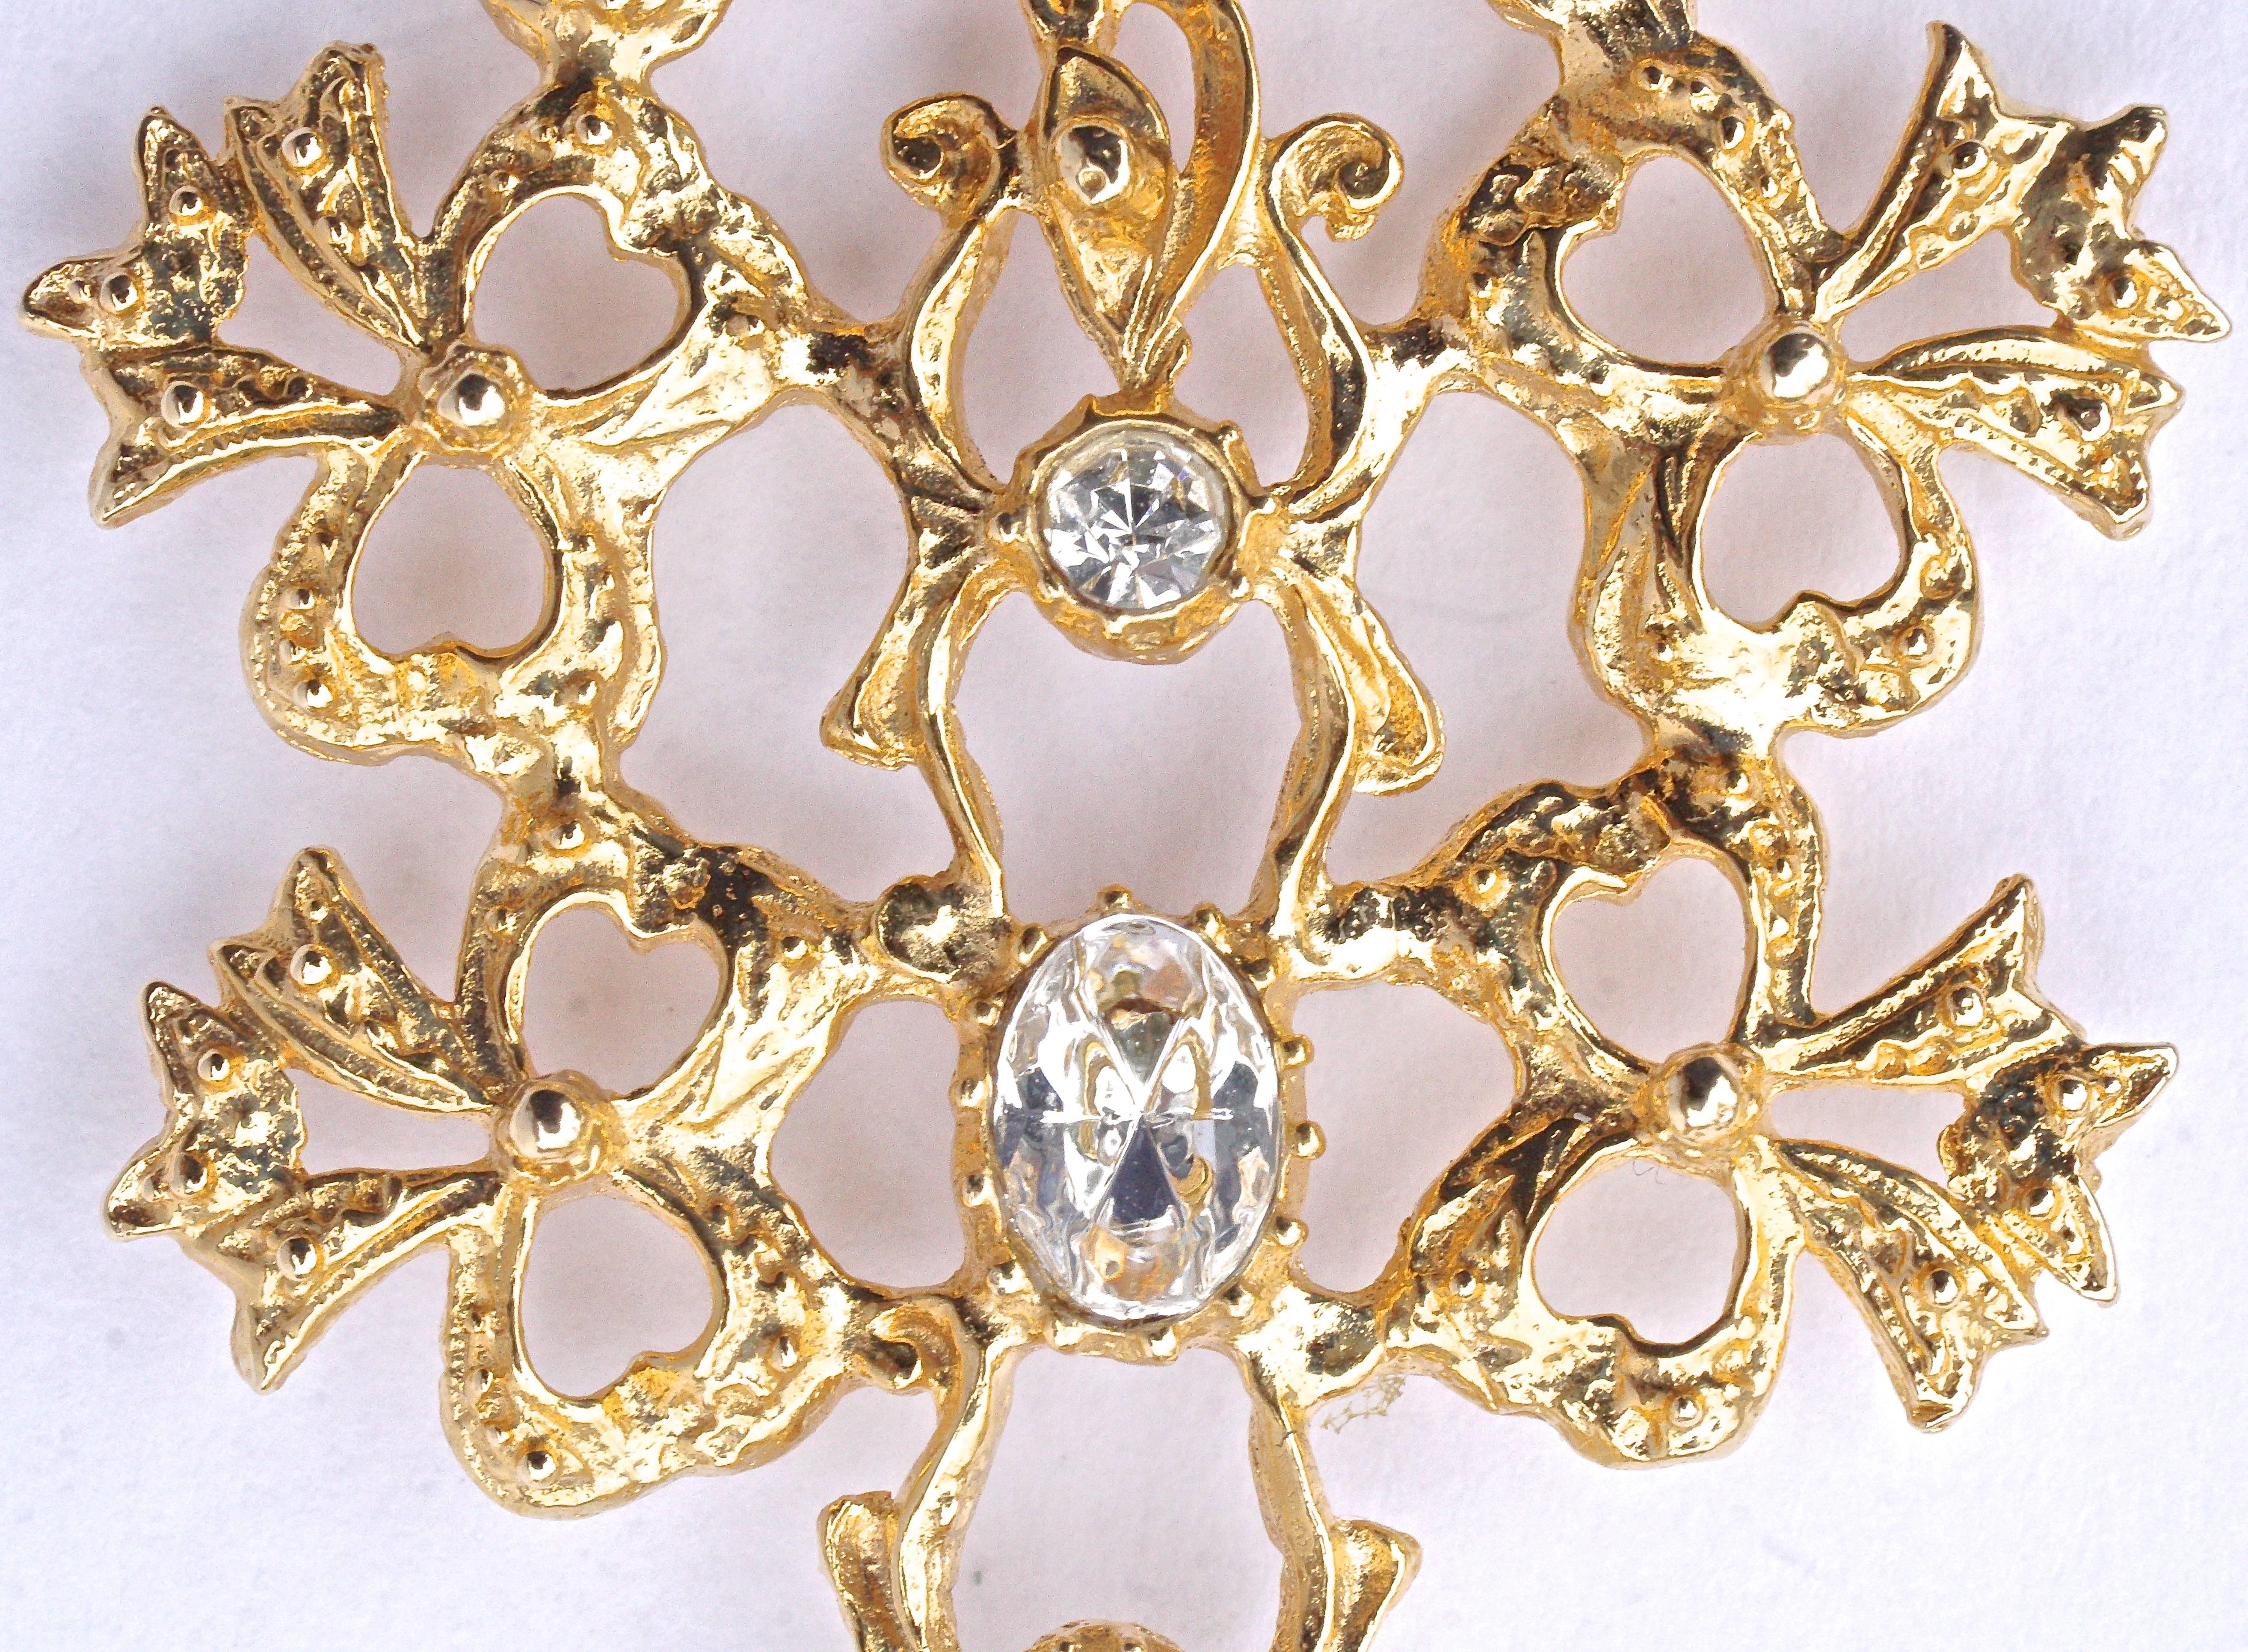 Gold Tone Clear Rhinestones Flower Bows Chandelier Vintage Statement Earrings 1